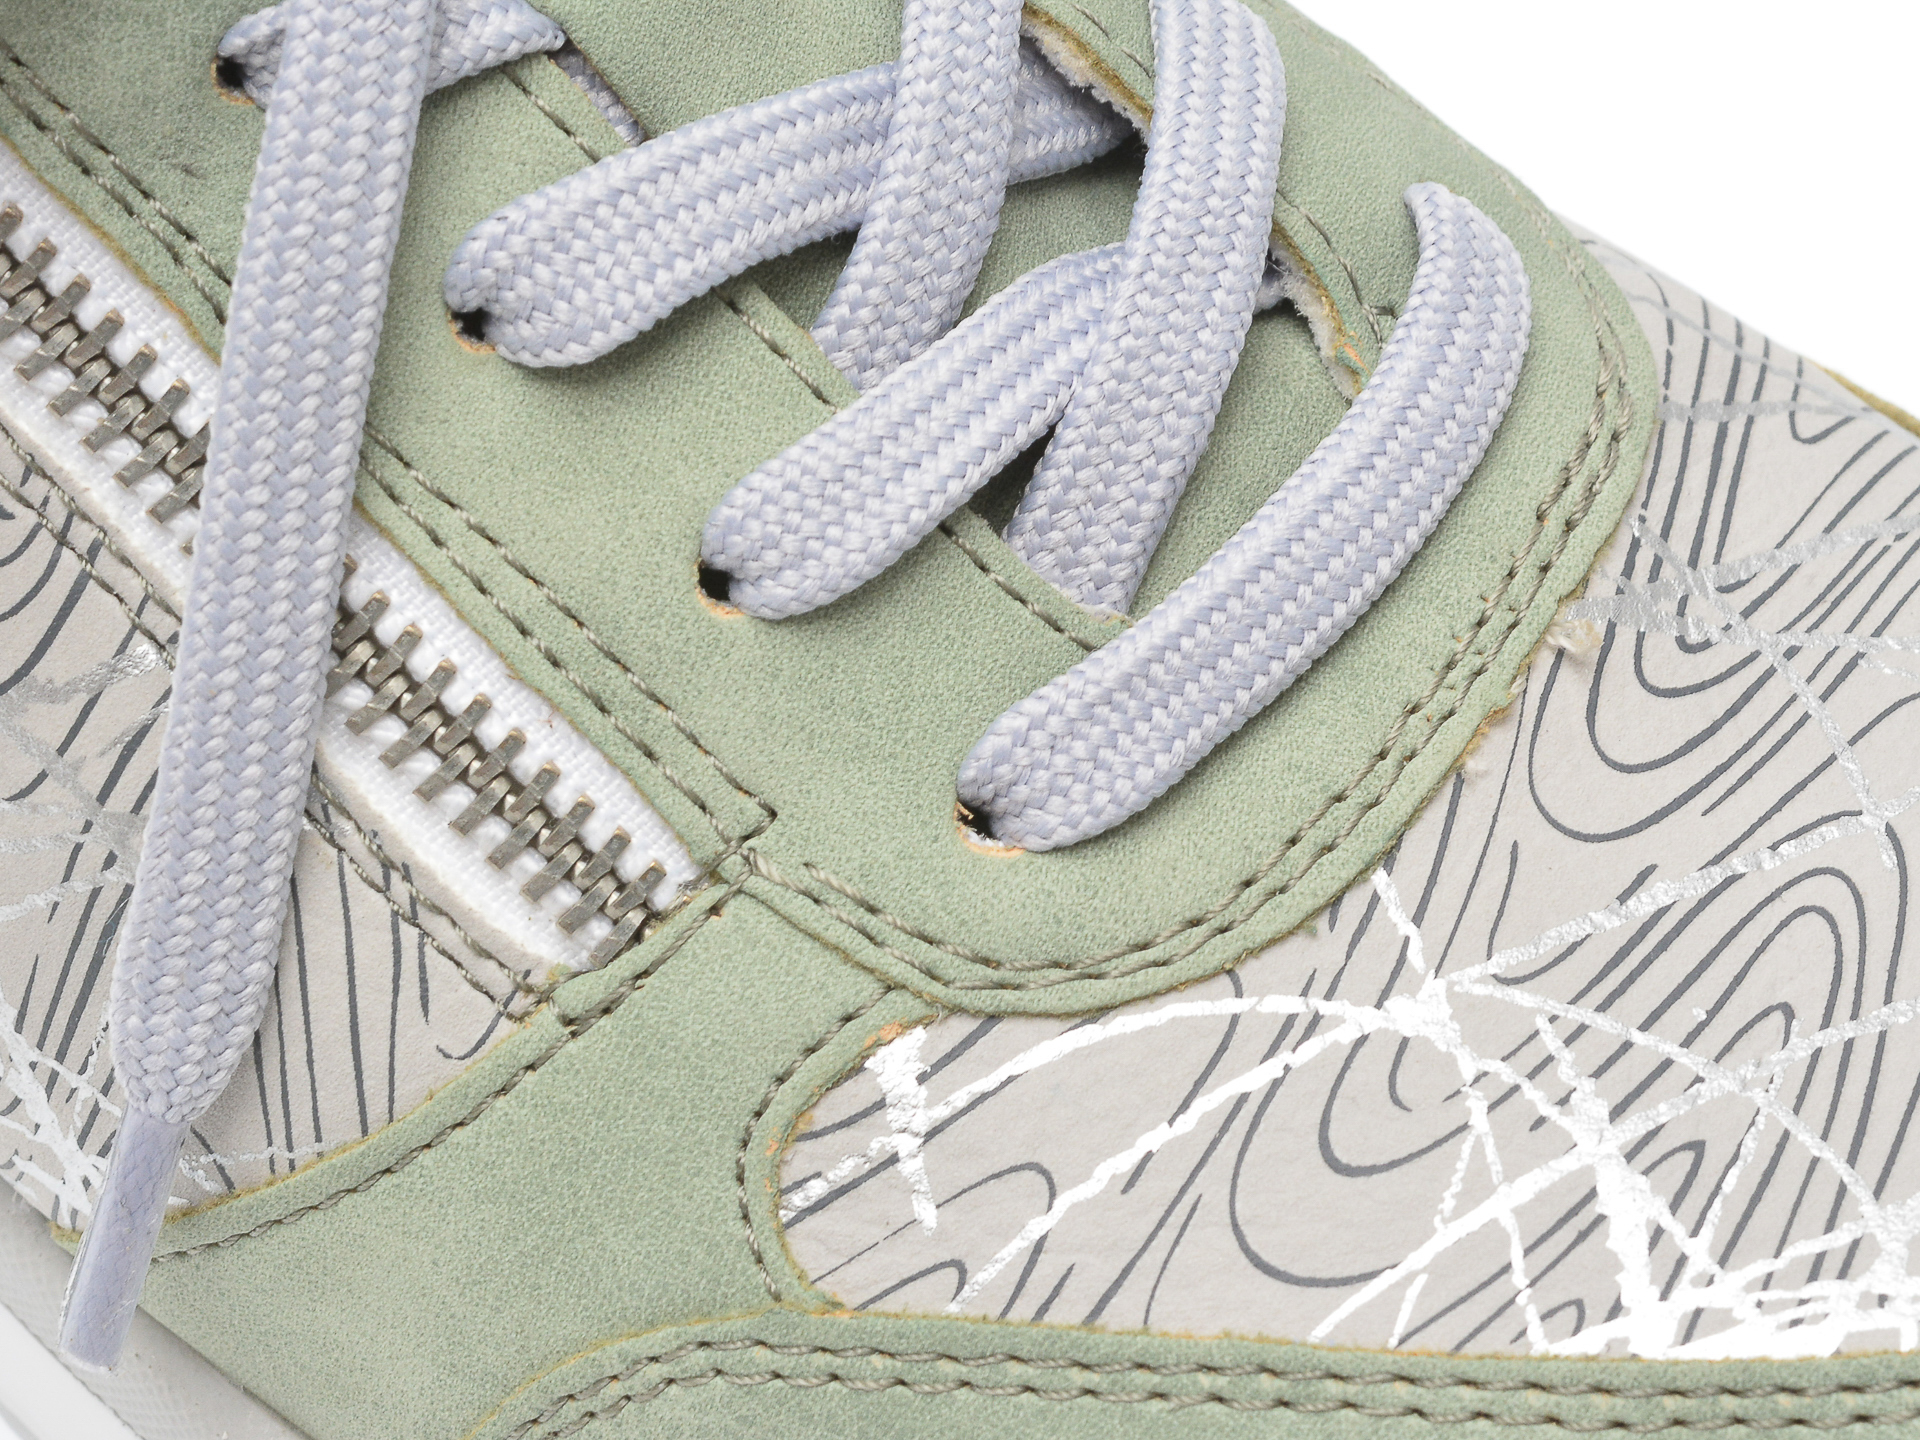 Poze Pantofi REMONTE verzi, D2400, din piele ecologica otter.ro